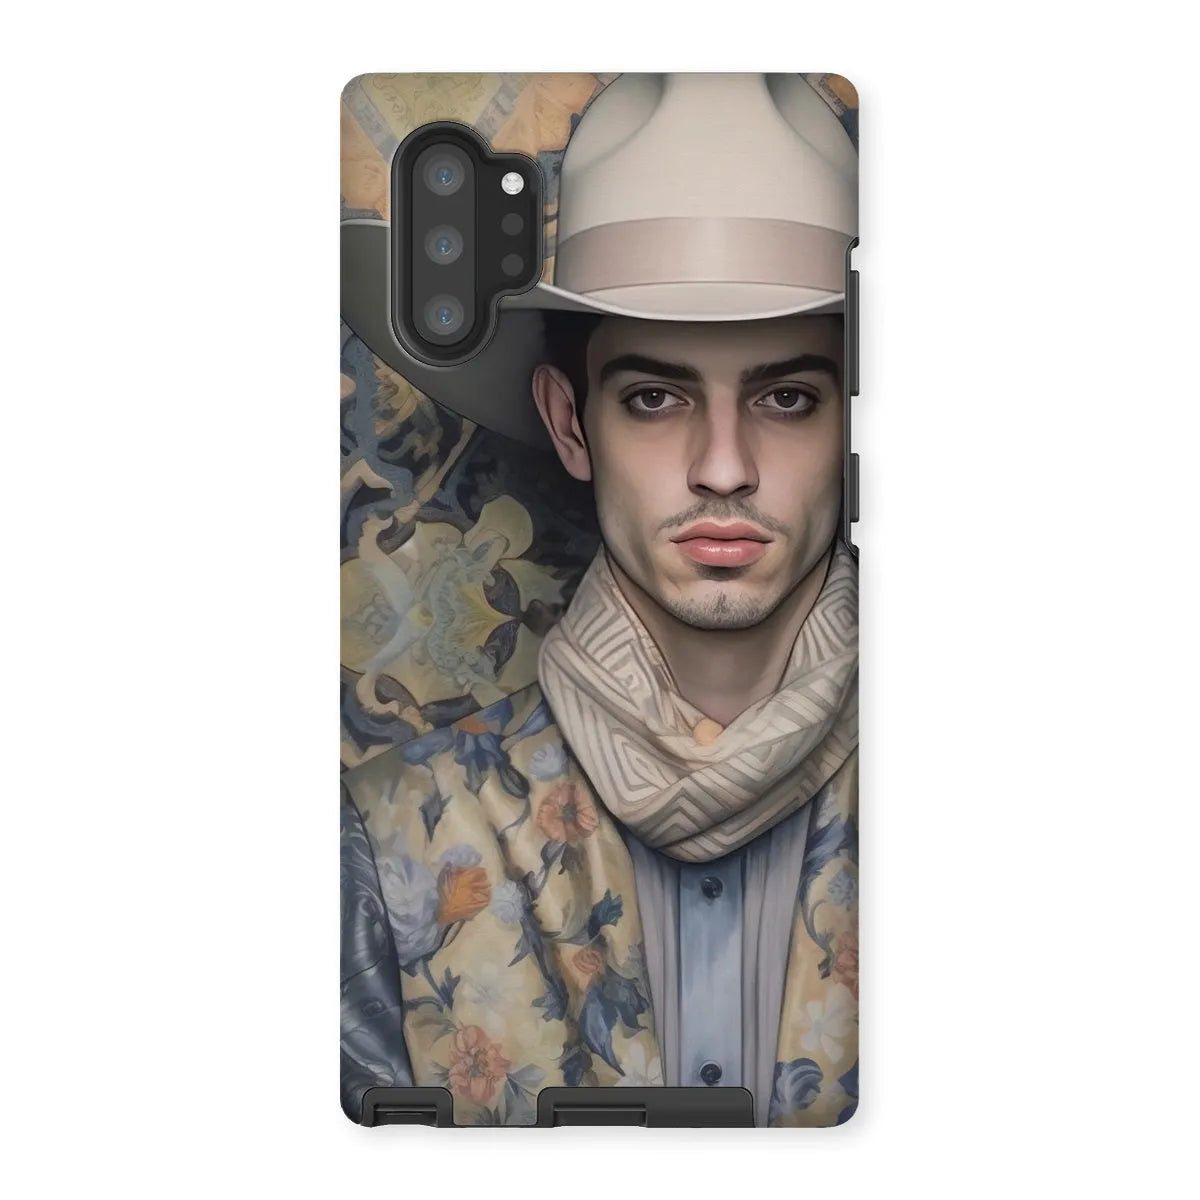 Farzad The Gay Cowboy - Dandy Gay Men Art Phone Case - Samsung Galaxy Note 10p / Matte - Mobile Phone Cases - Aesthetic